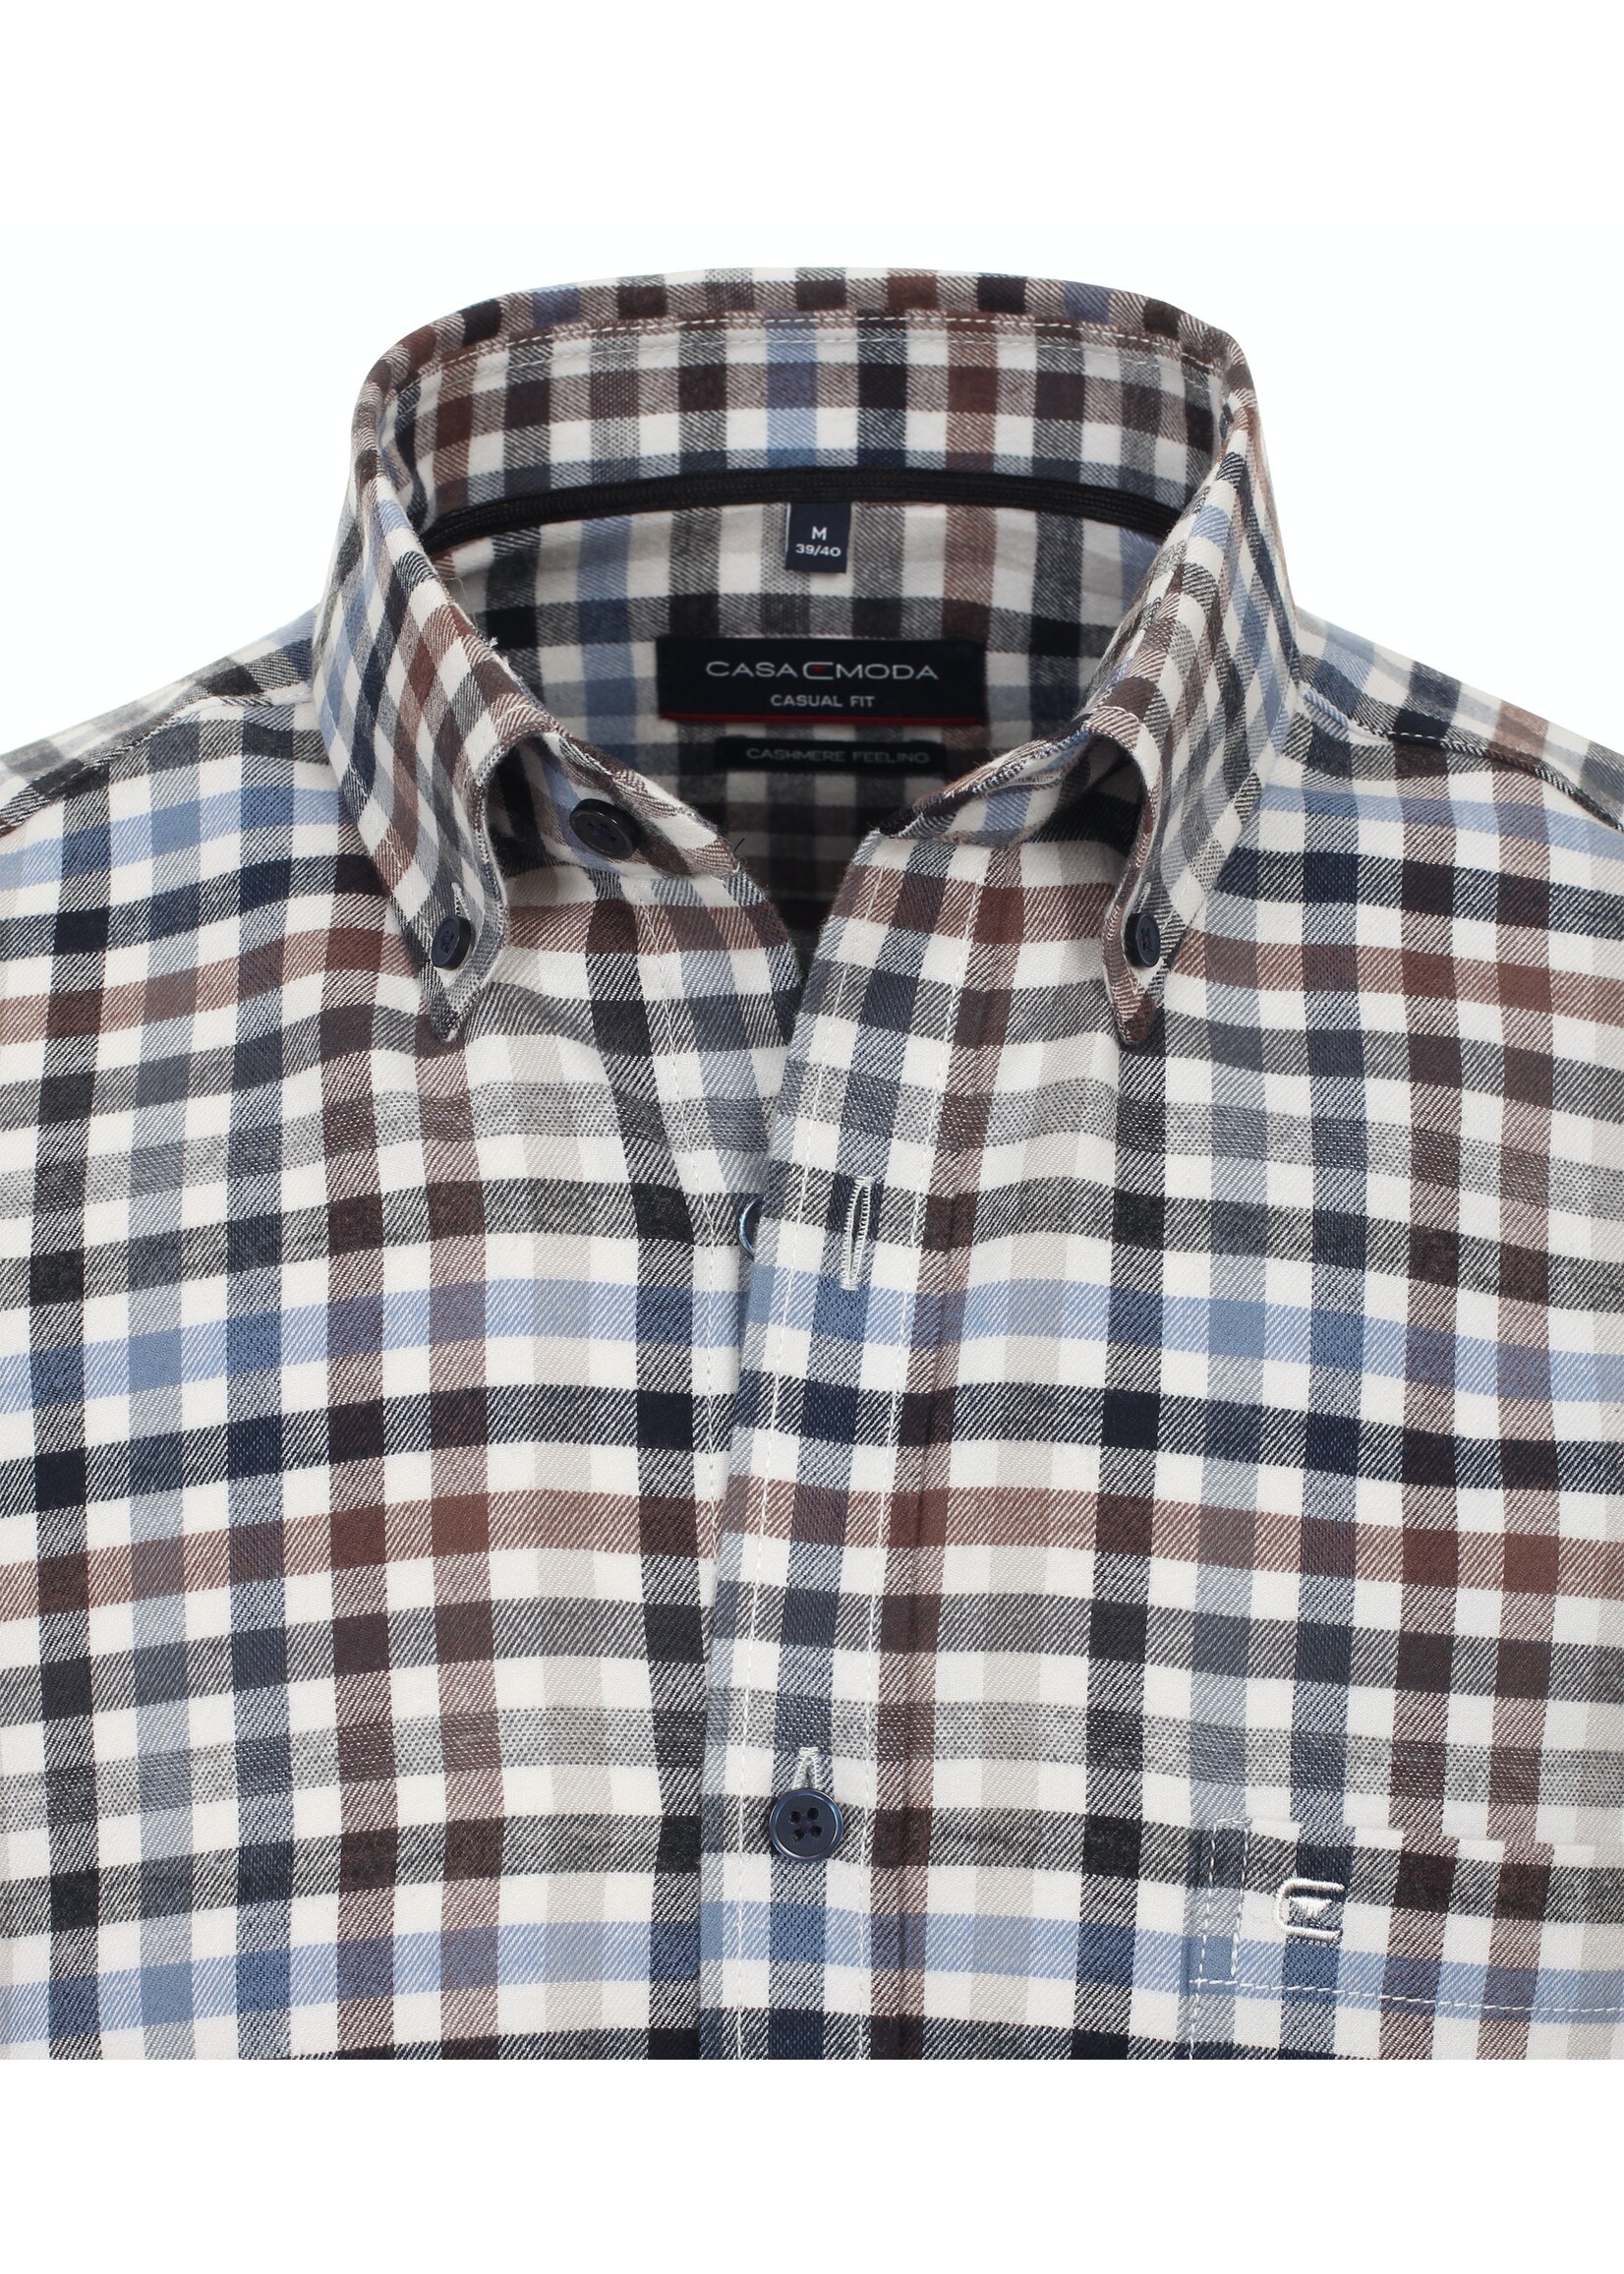 CASA MODA Men's classic flannel button down shirt